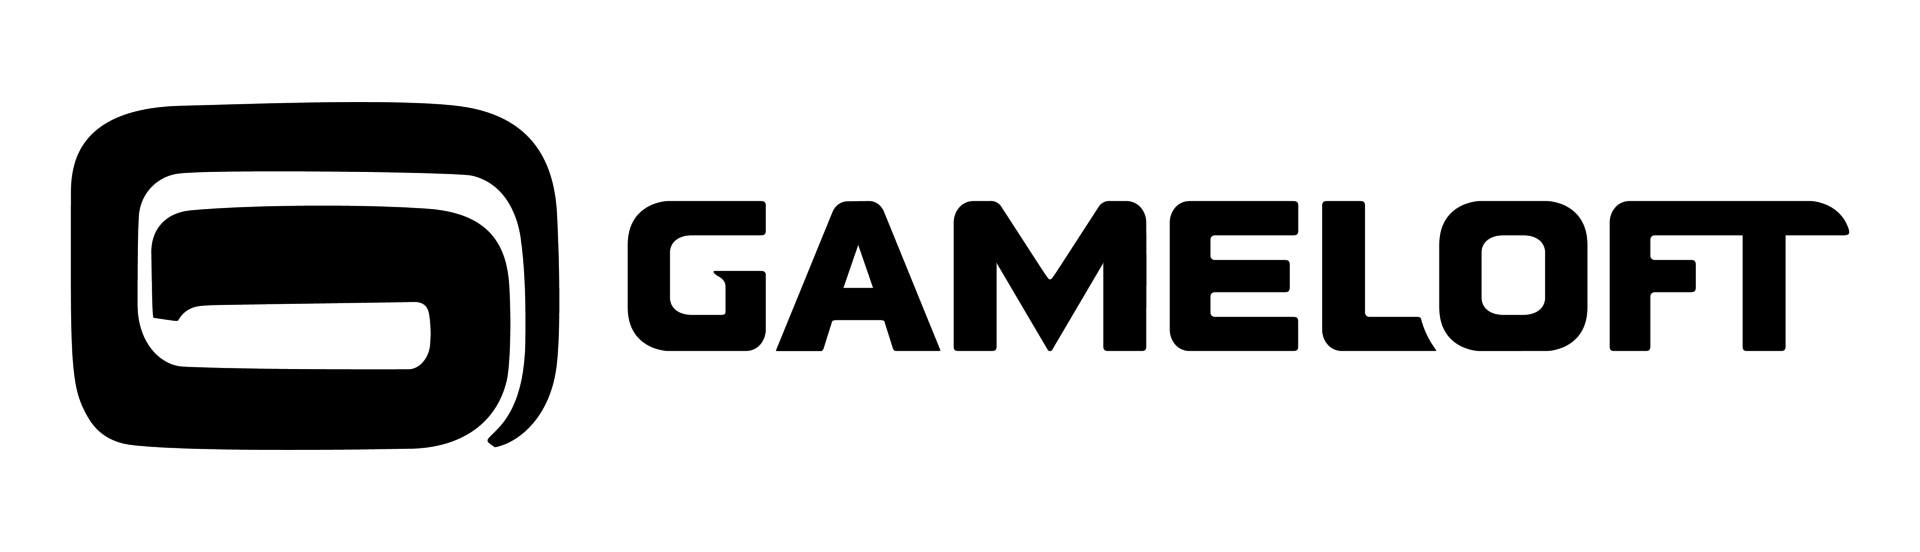 gameloft logo black